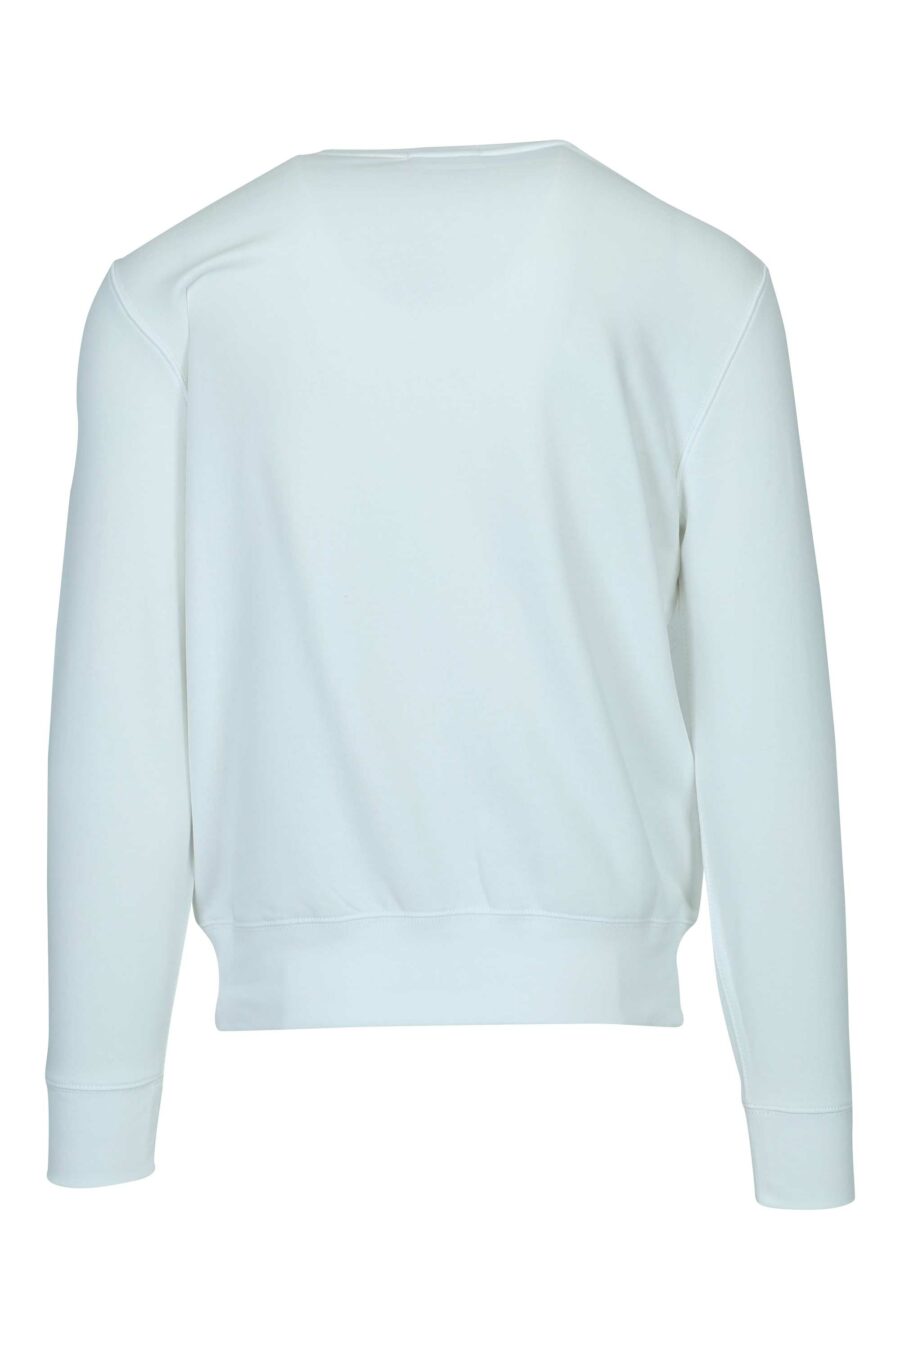 Weißes Sweatshirt mit Maxilogo "Polobär" - 3616536084239 1